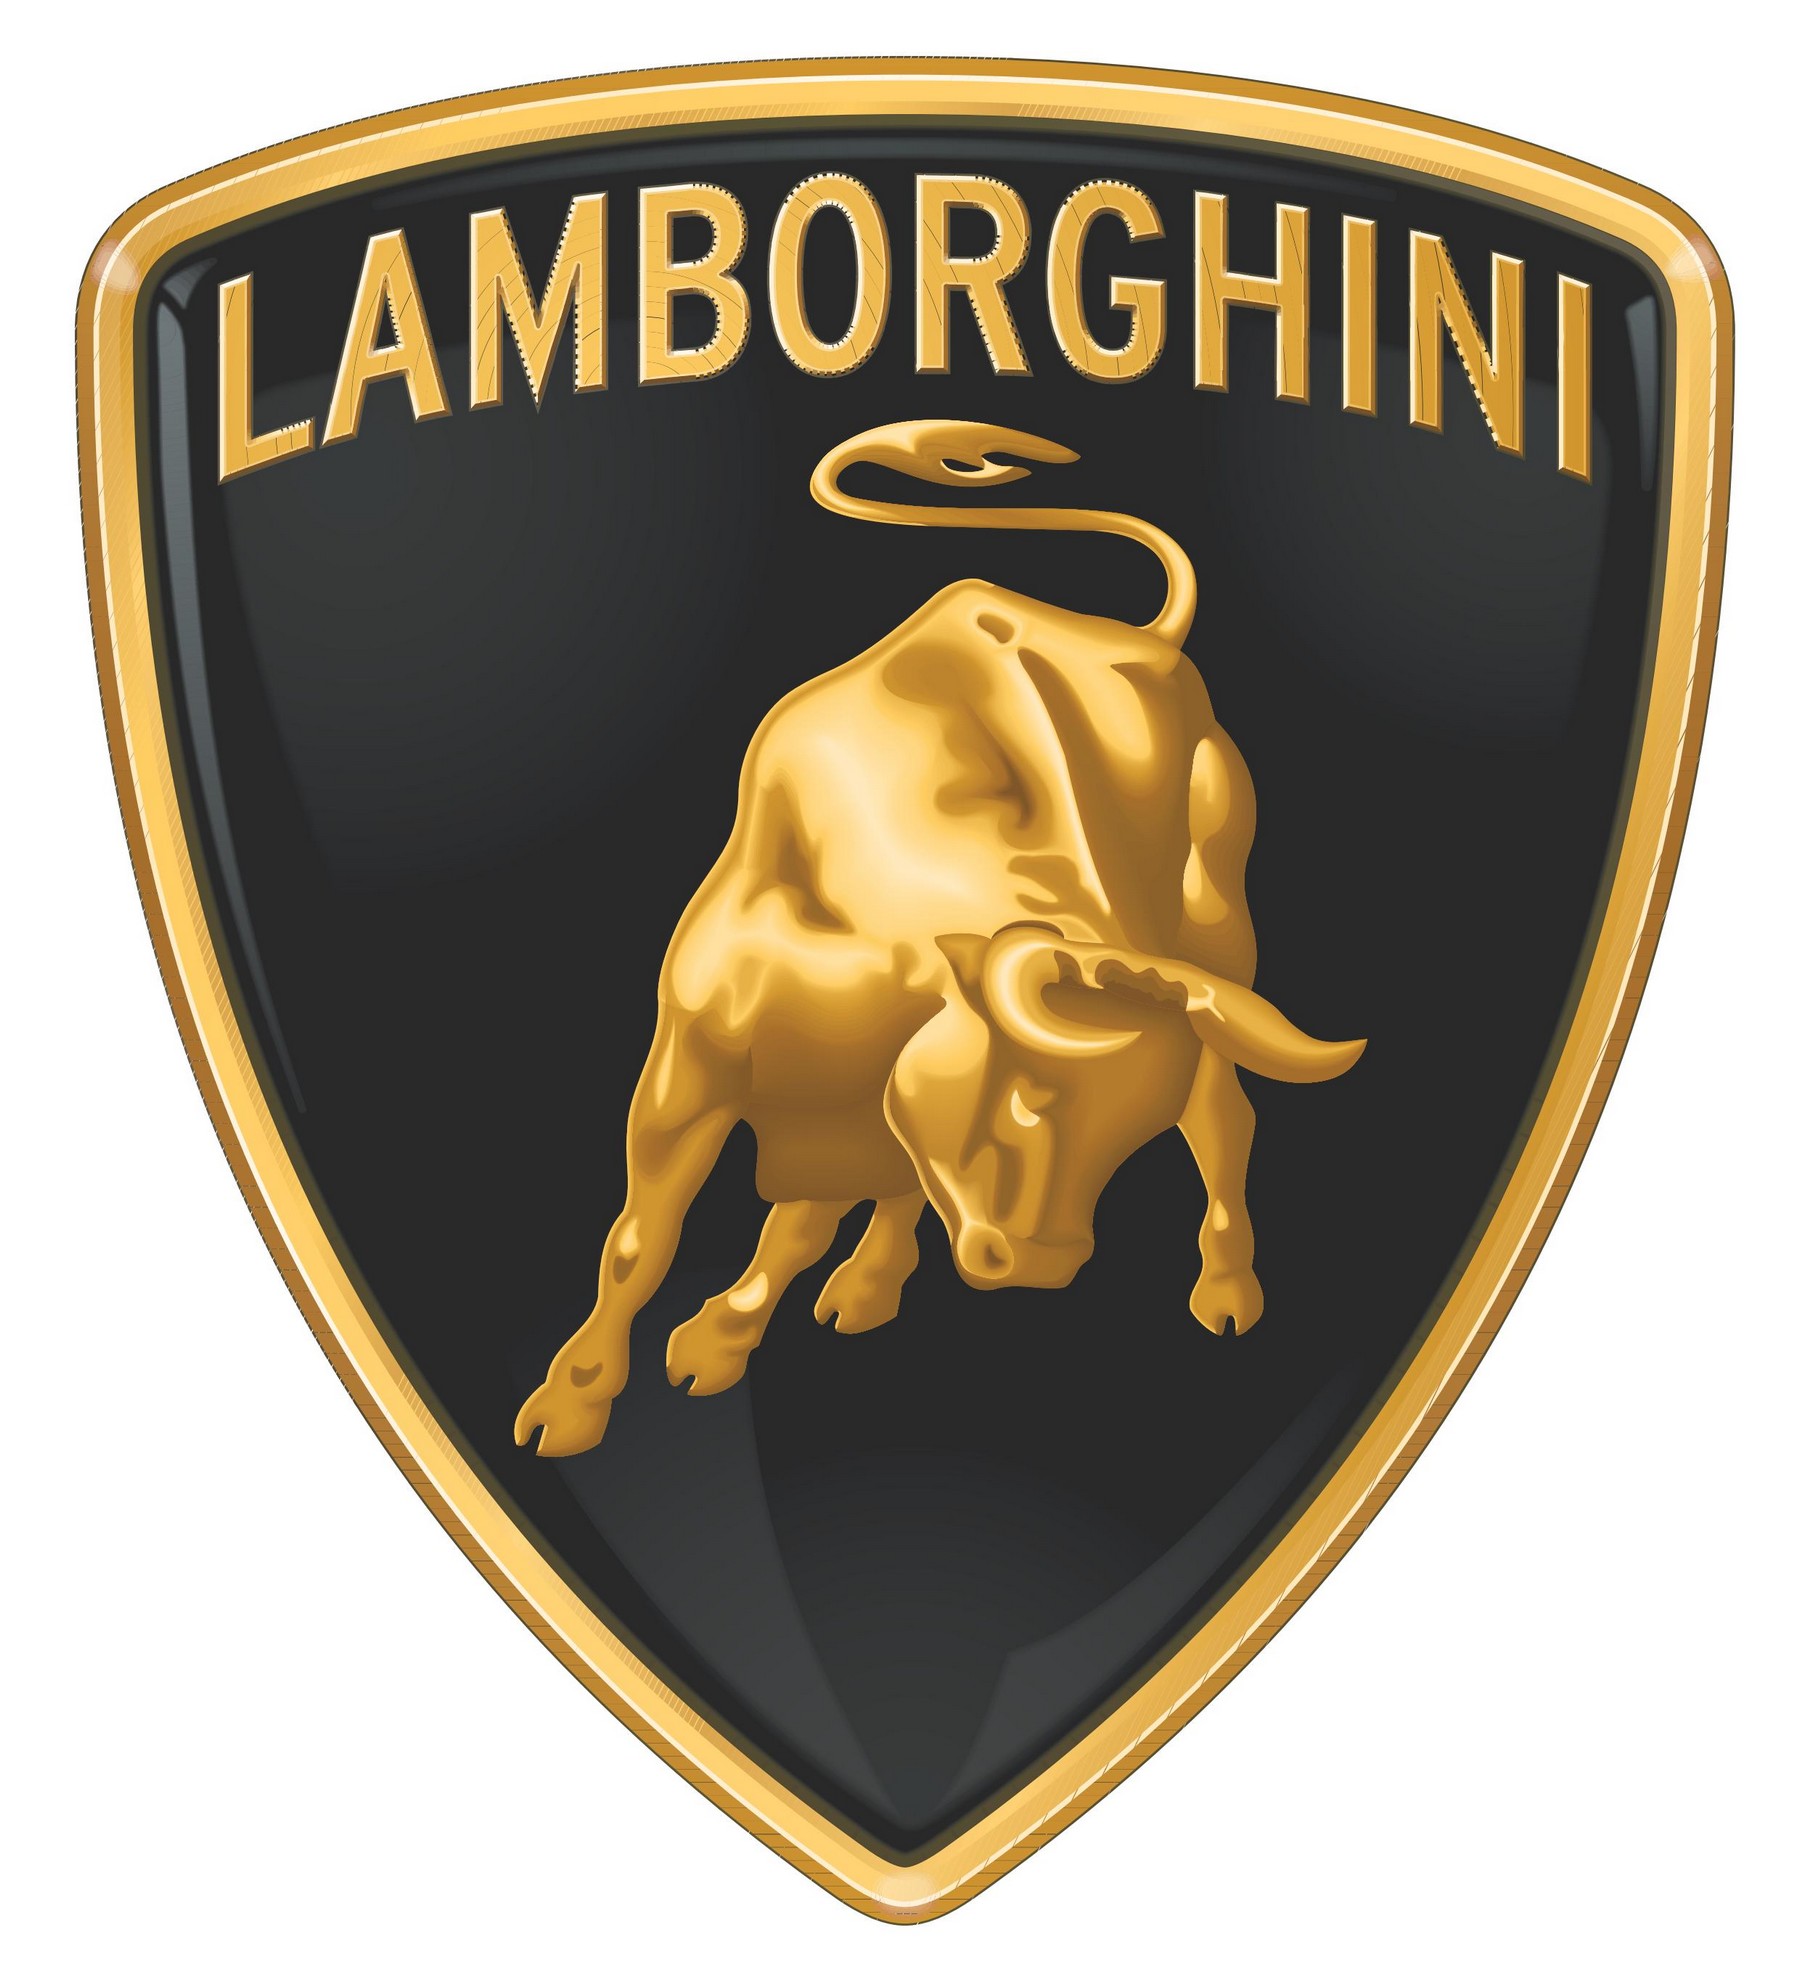 Lamborghini Logo [Eps Pdf] - Volkswagen Group Vector, Transparent background PNG HD thumbnail